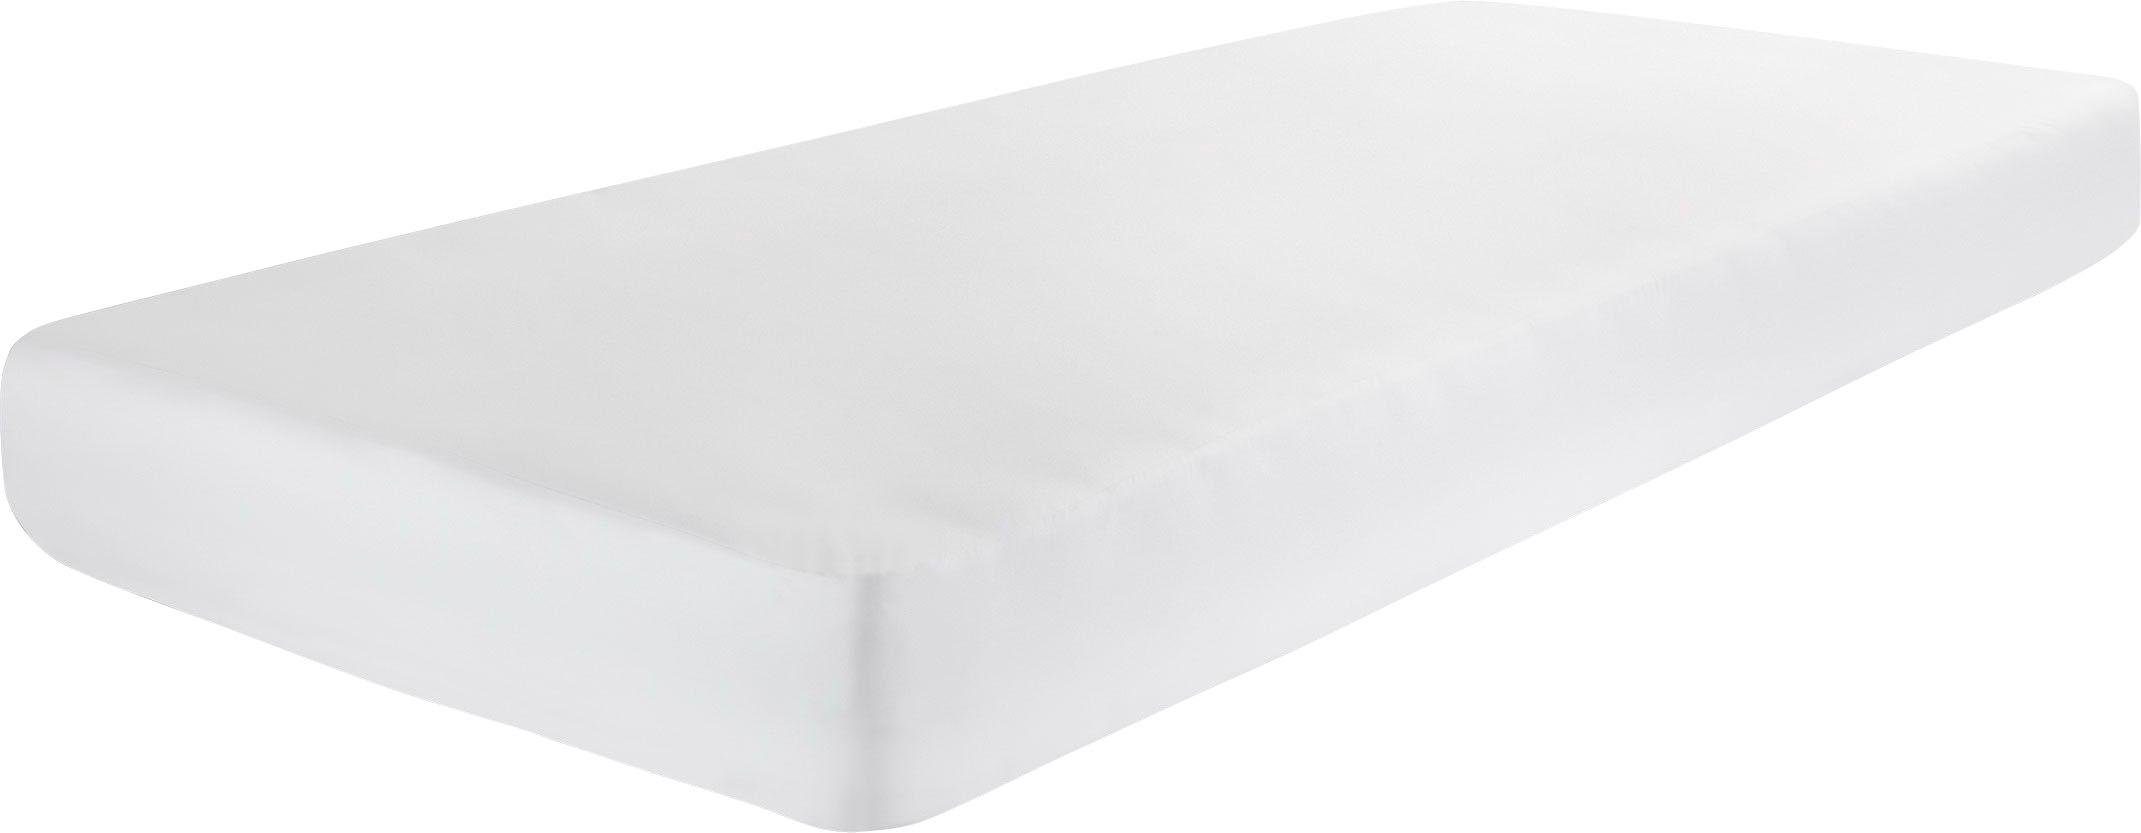 Matratzenschutzbezug wasserdichtes Spannbettlaken Dormisette Protect & Care, Hausstauballergiker geeignet